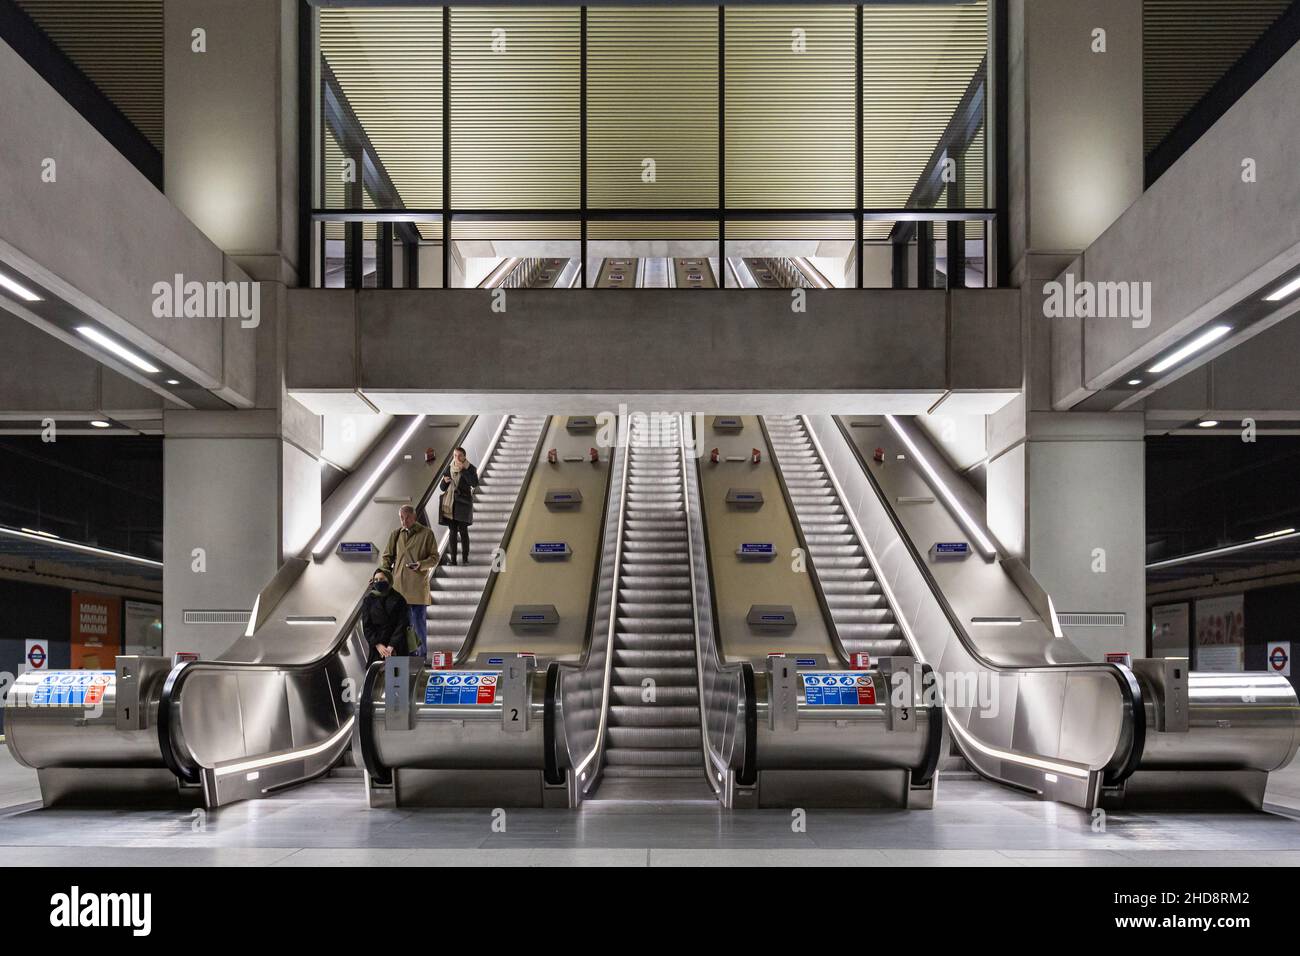 Escalators at Nine Elms Station  on the London Underground Stock Photo